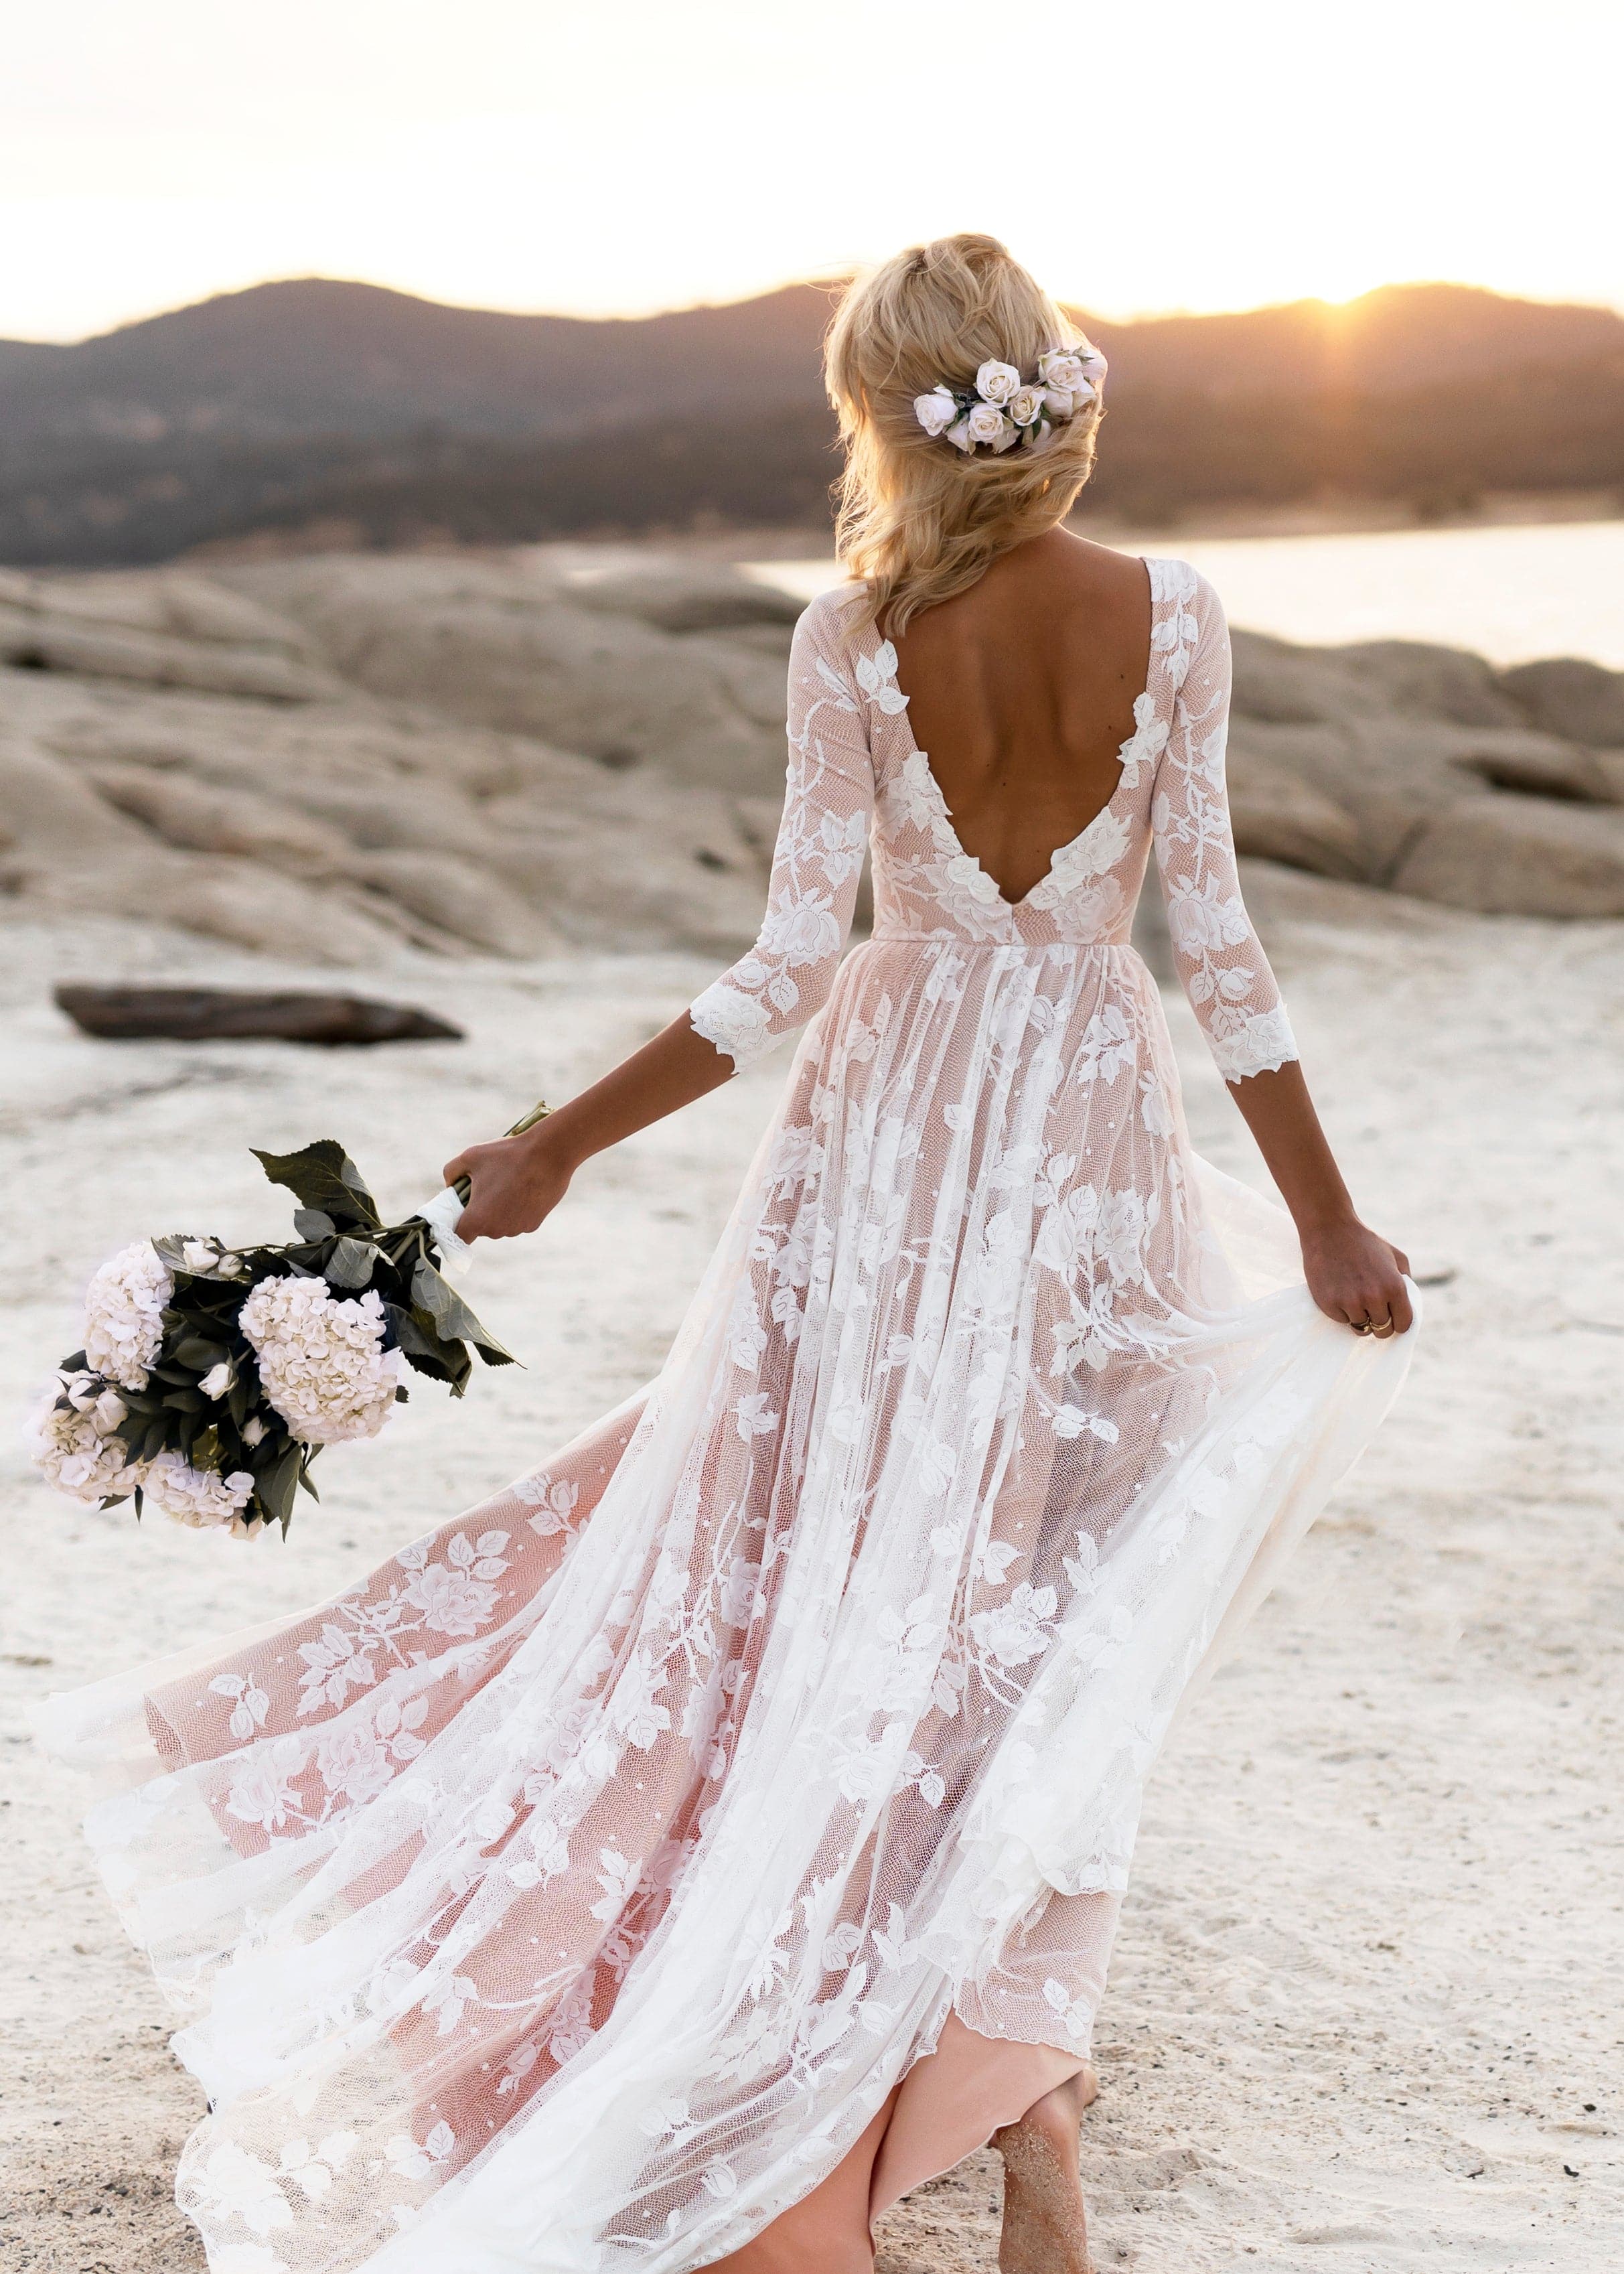 bohemian style wedding dresses